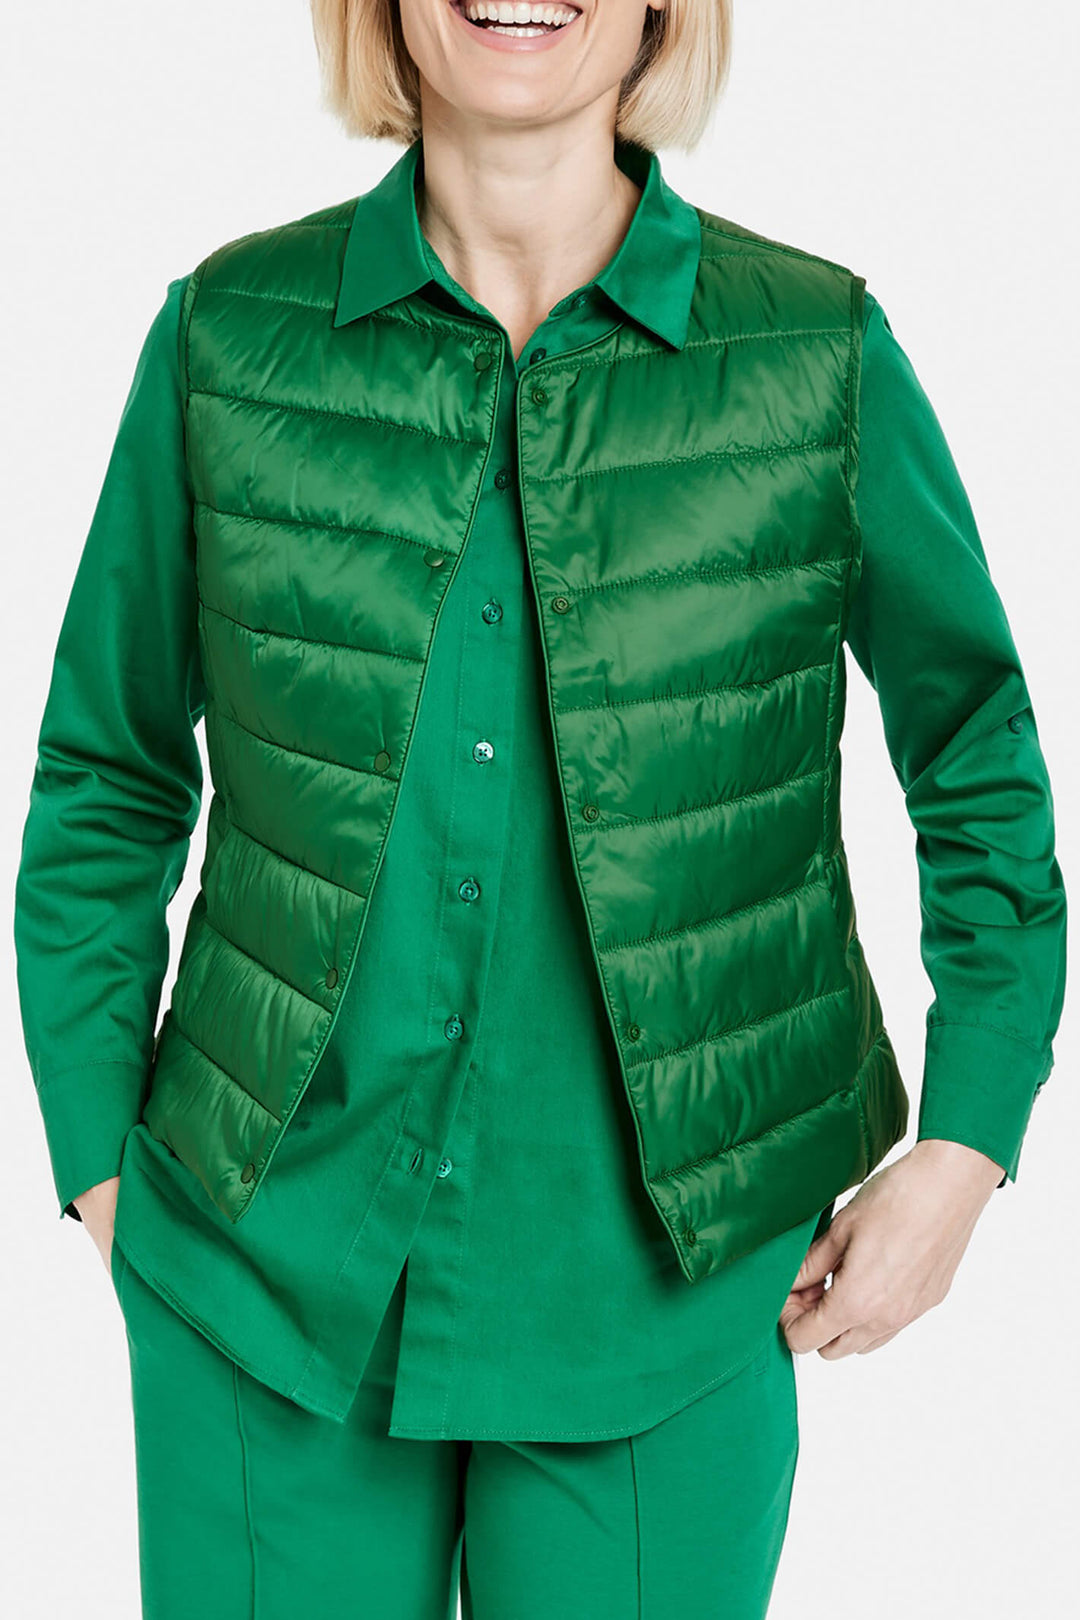 Gerry Weber 945004 Vibrant Green Gilet - Experience Boutique